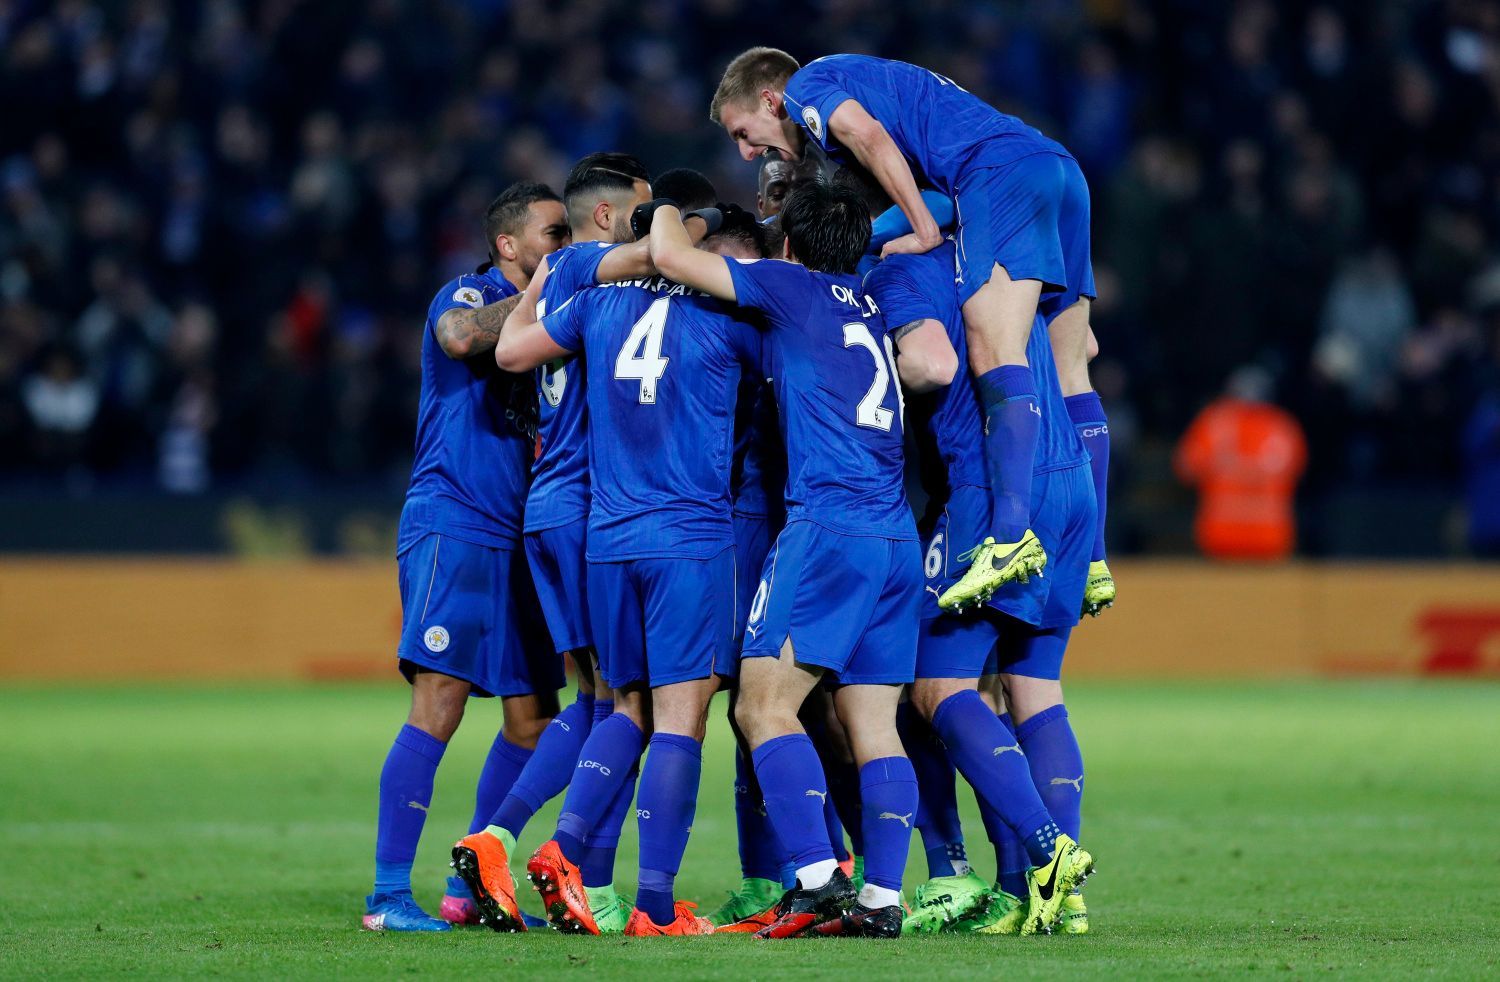 Radost fotbalistů Leicester City